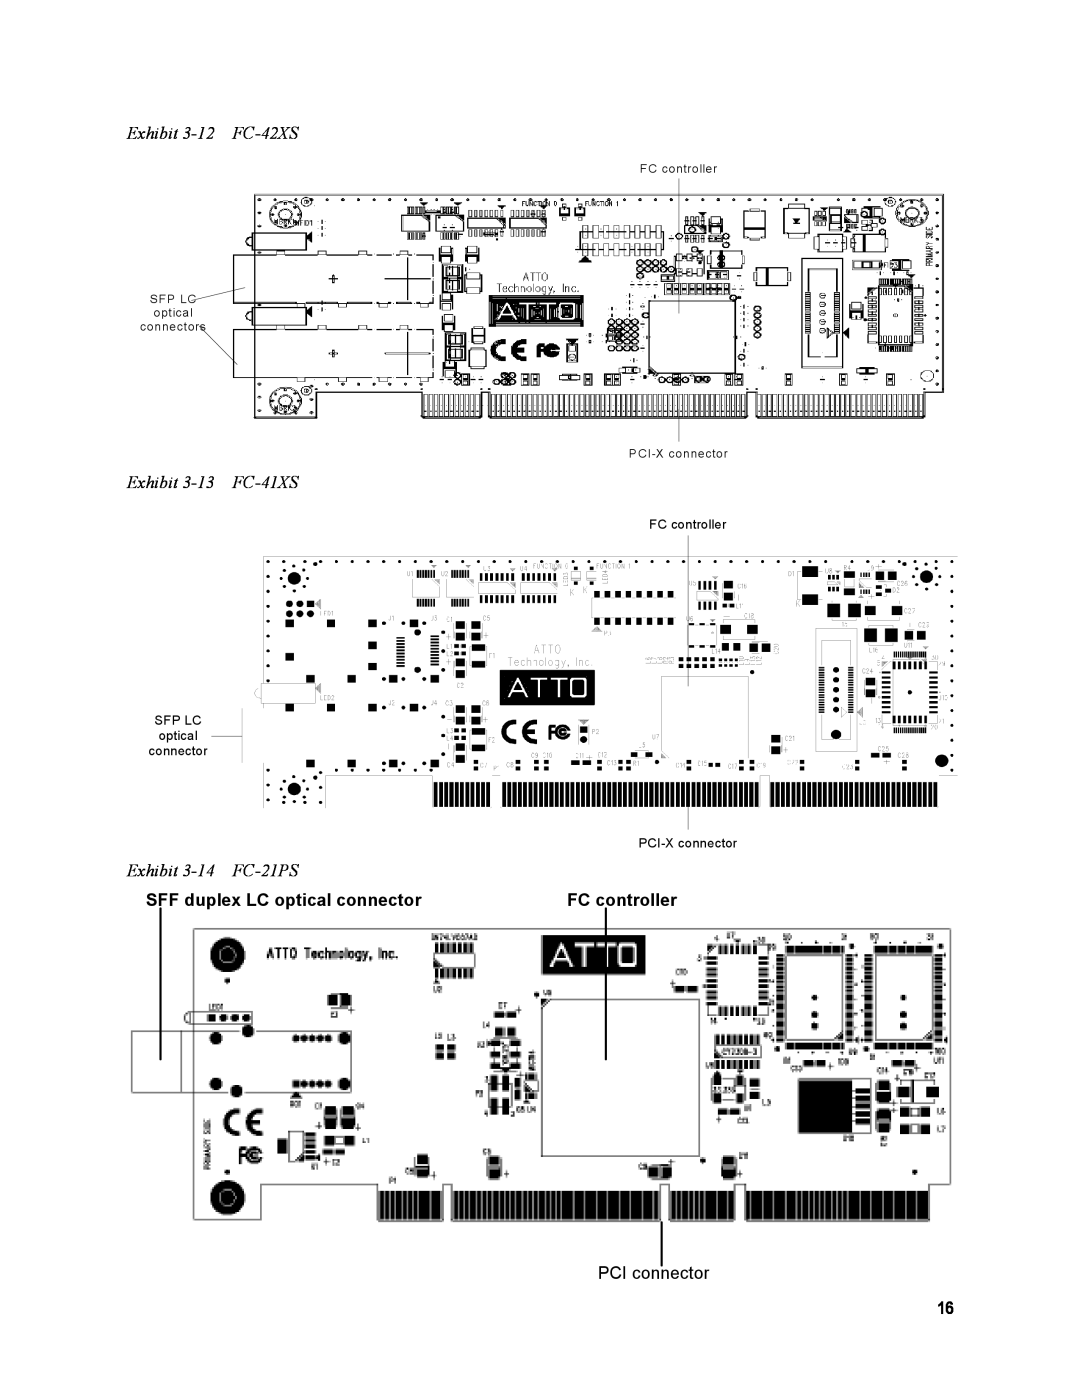 ATTO Technology FC-44ES 4-Gb Exhibit 3-12 FC-42XS, Exhibit 3-13 FC-41XS, Exhibit 3-14 FC-21PS, FC controller 